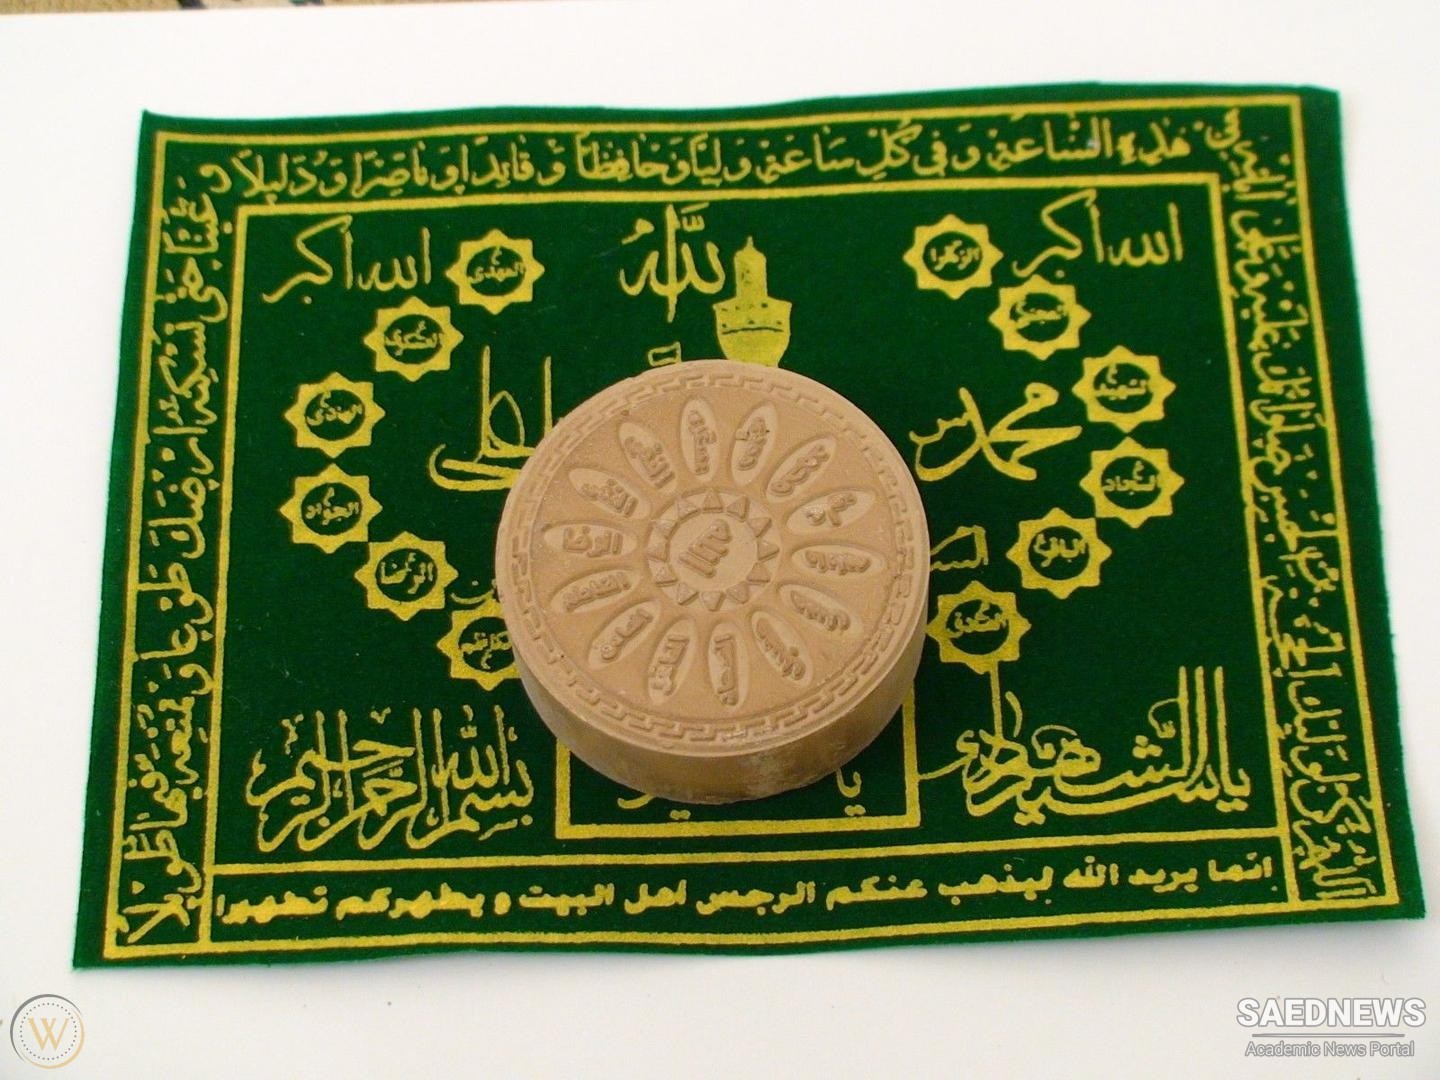 Book and Tradition in Shia Islam